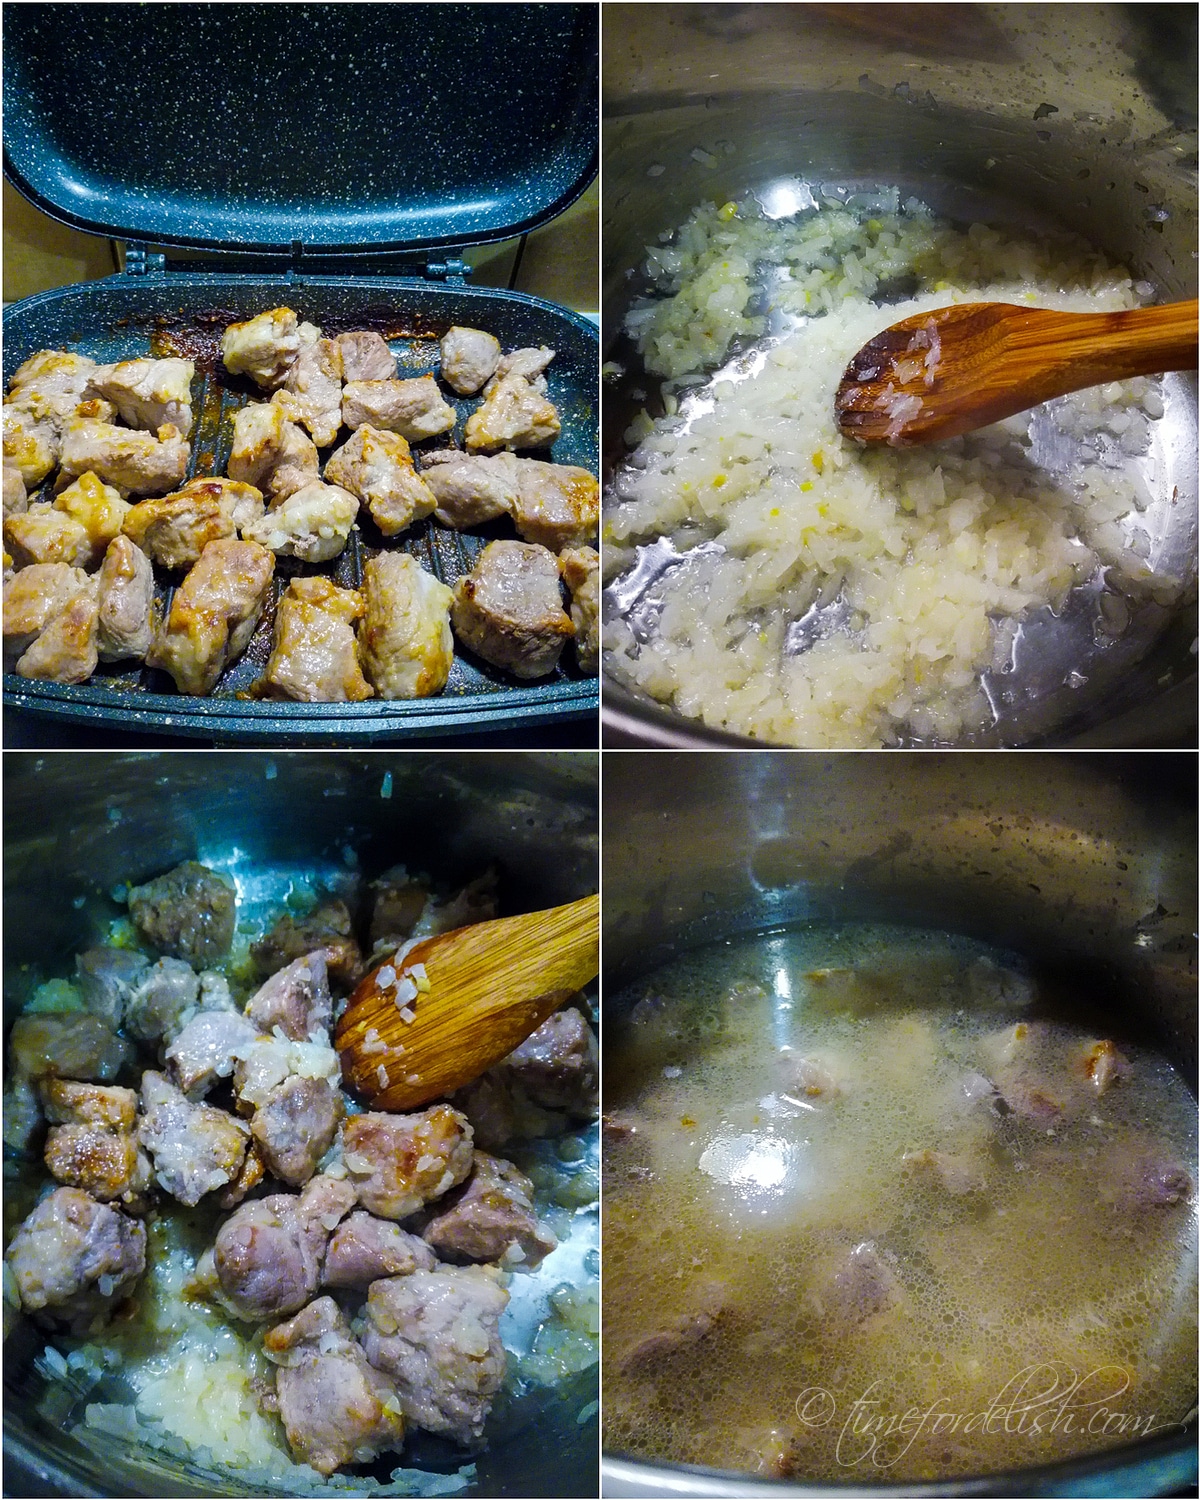 pork and potato stew